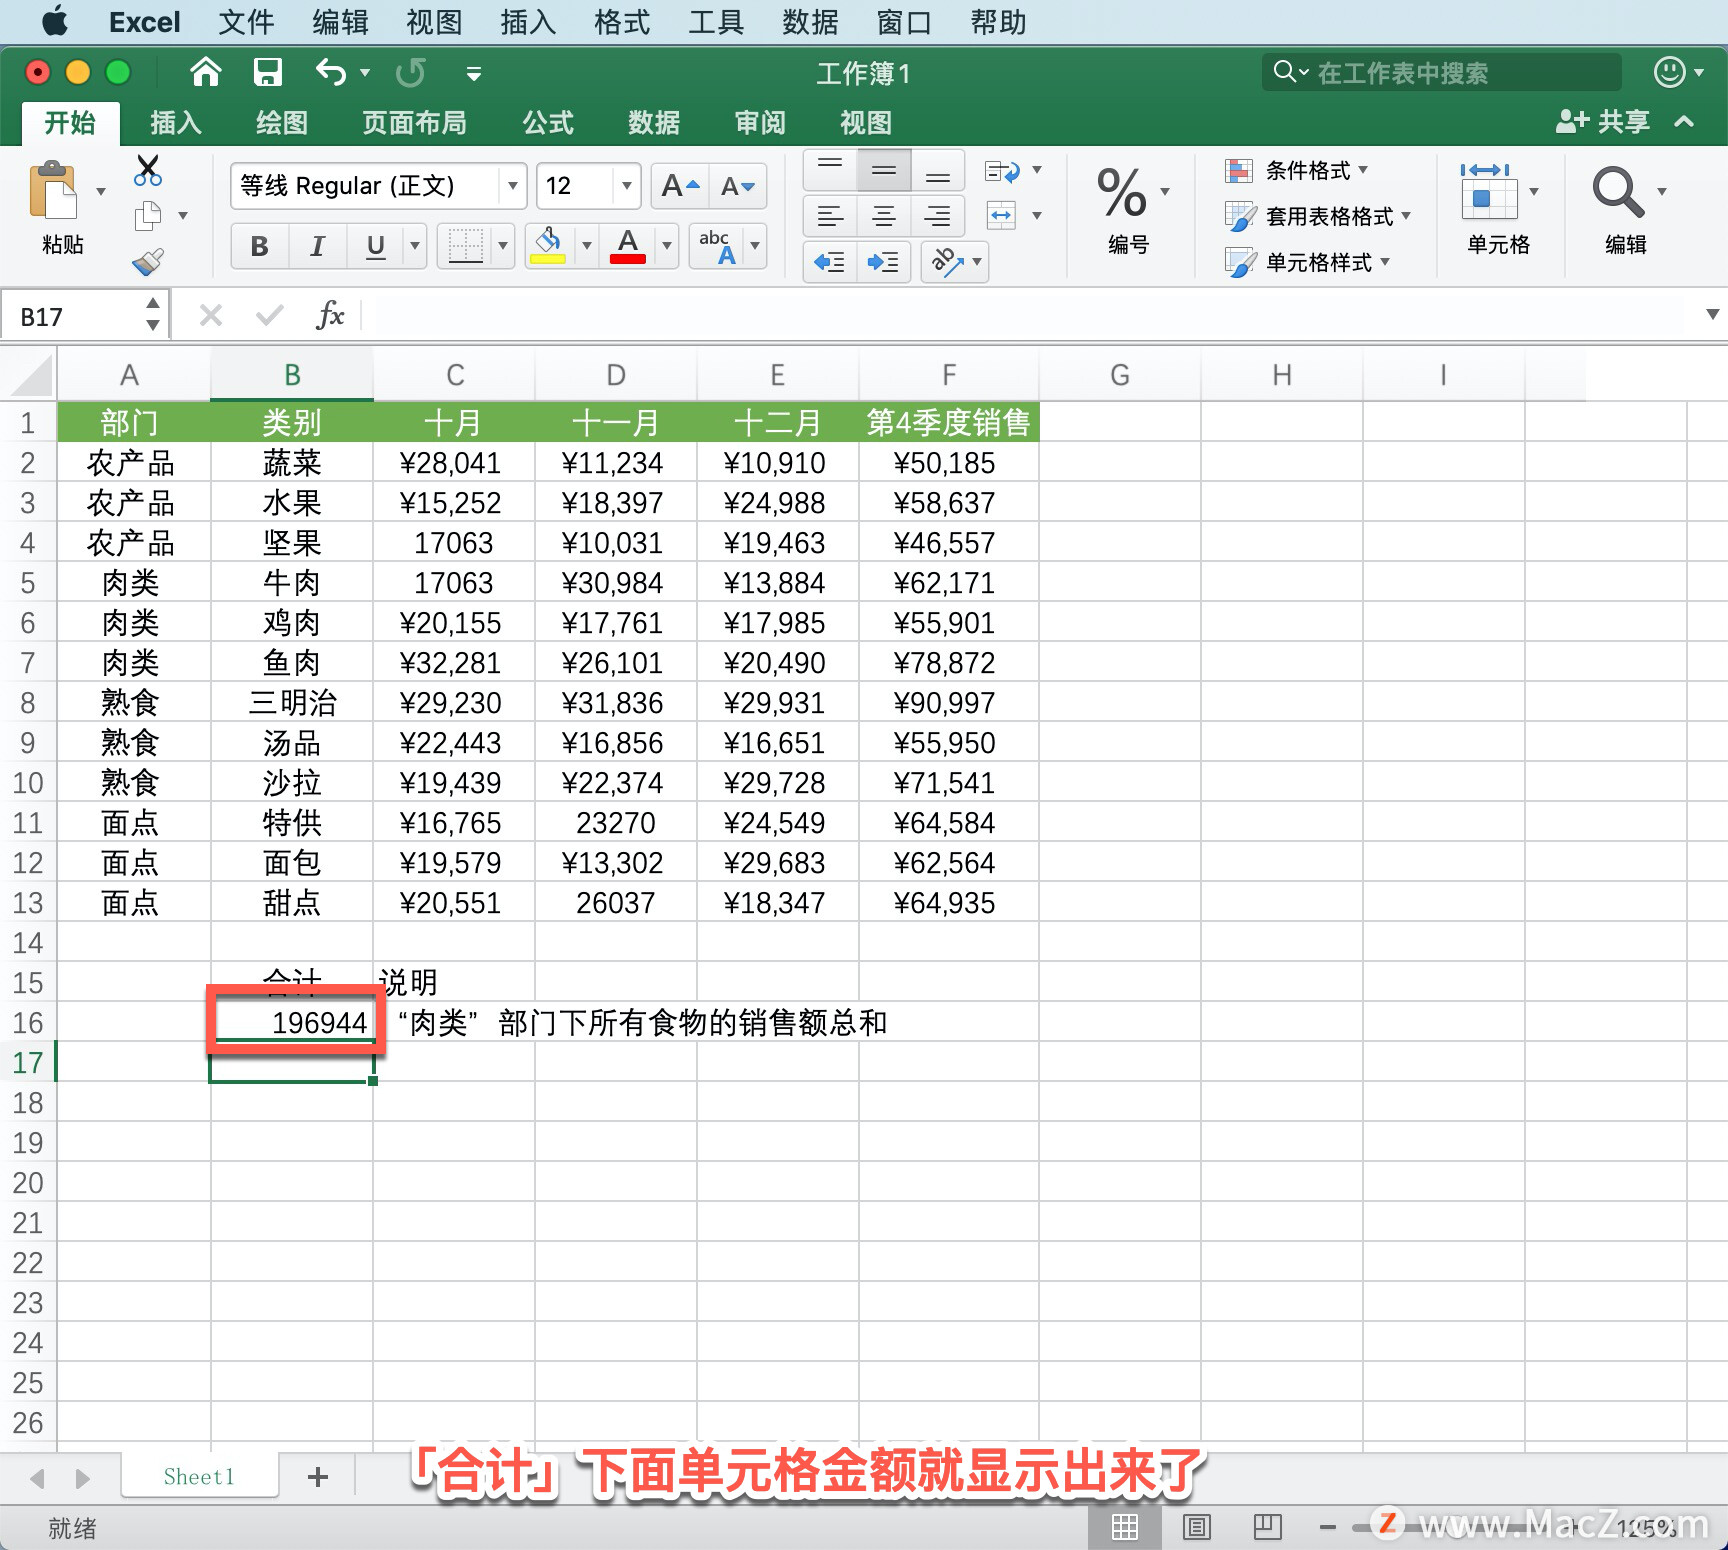 Microsoft Excel 教程「33」，如何在 Excel 中使用 SUMIF 函数？